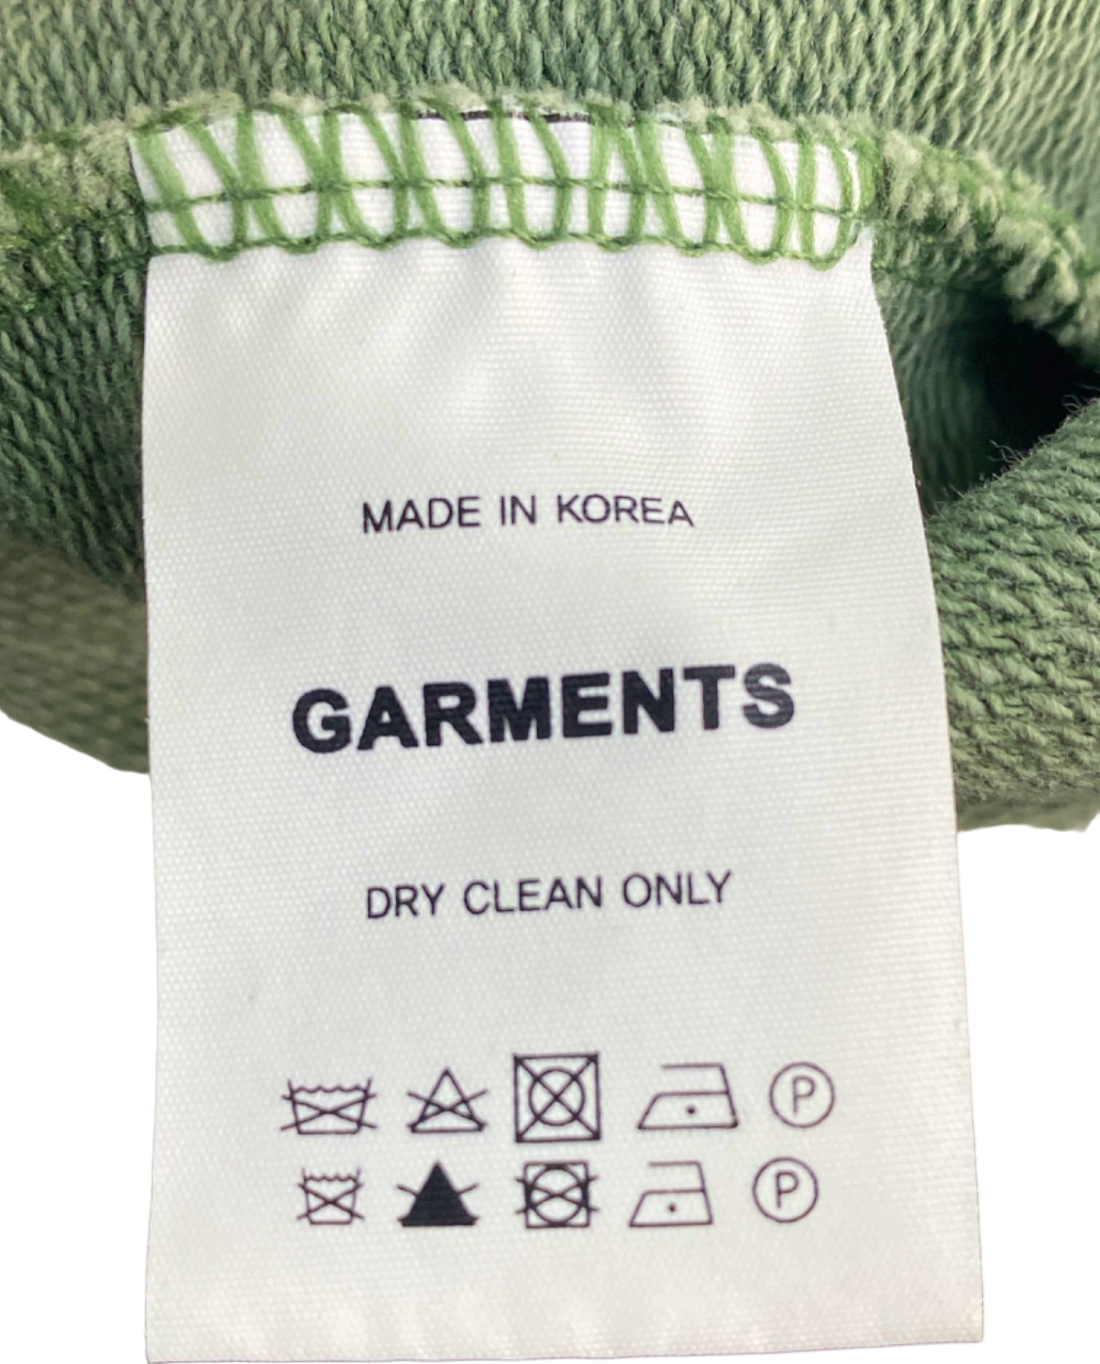 Garments Green Archive Long Sleeve Polo UK M